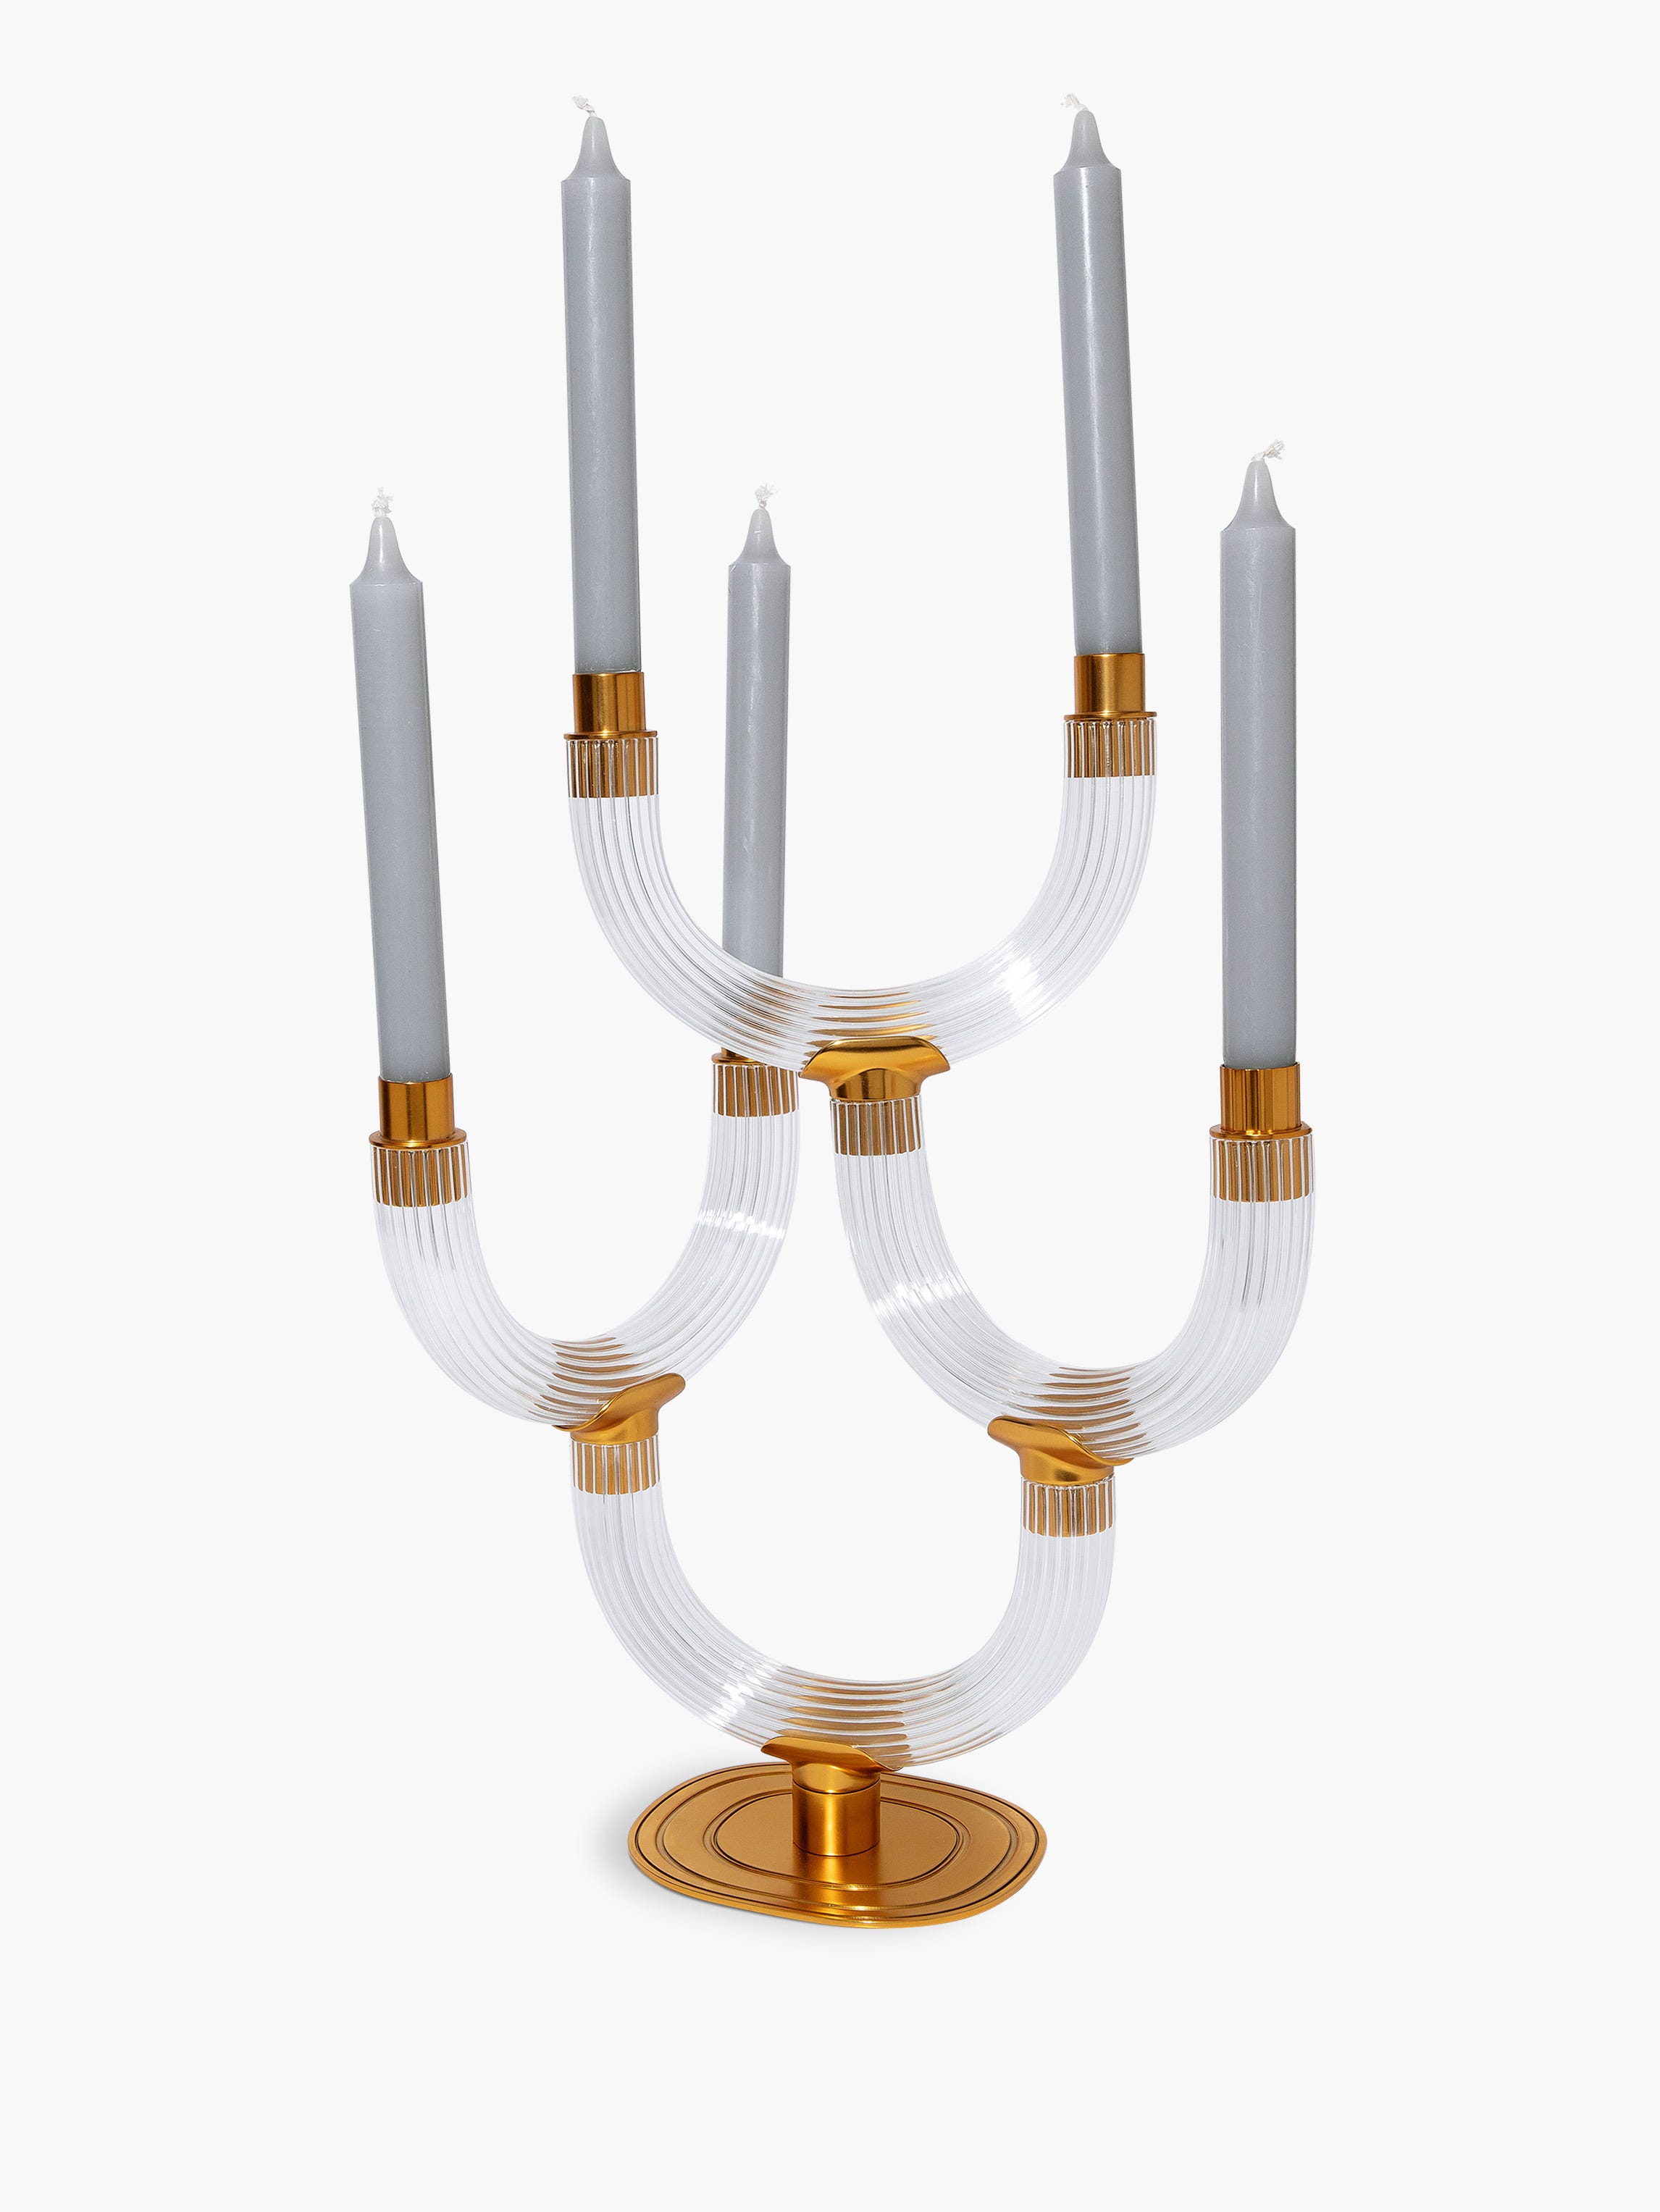 infinite candle holder additionnal module | Diptyque Paris